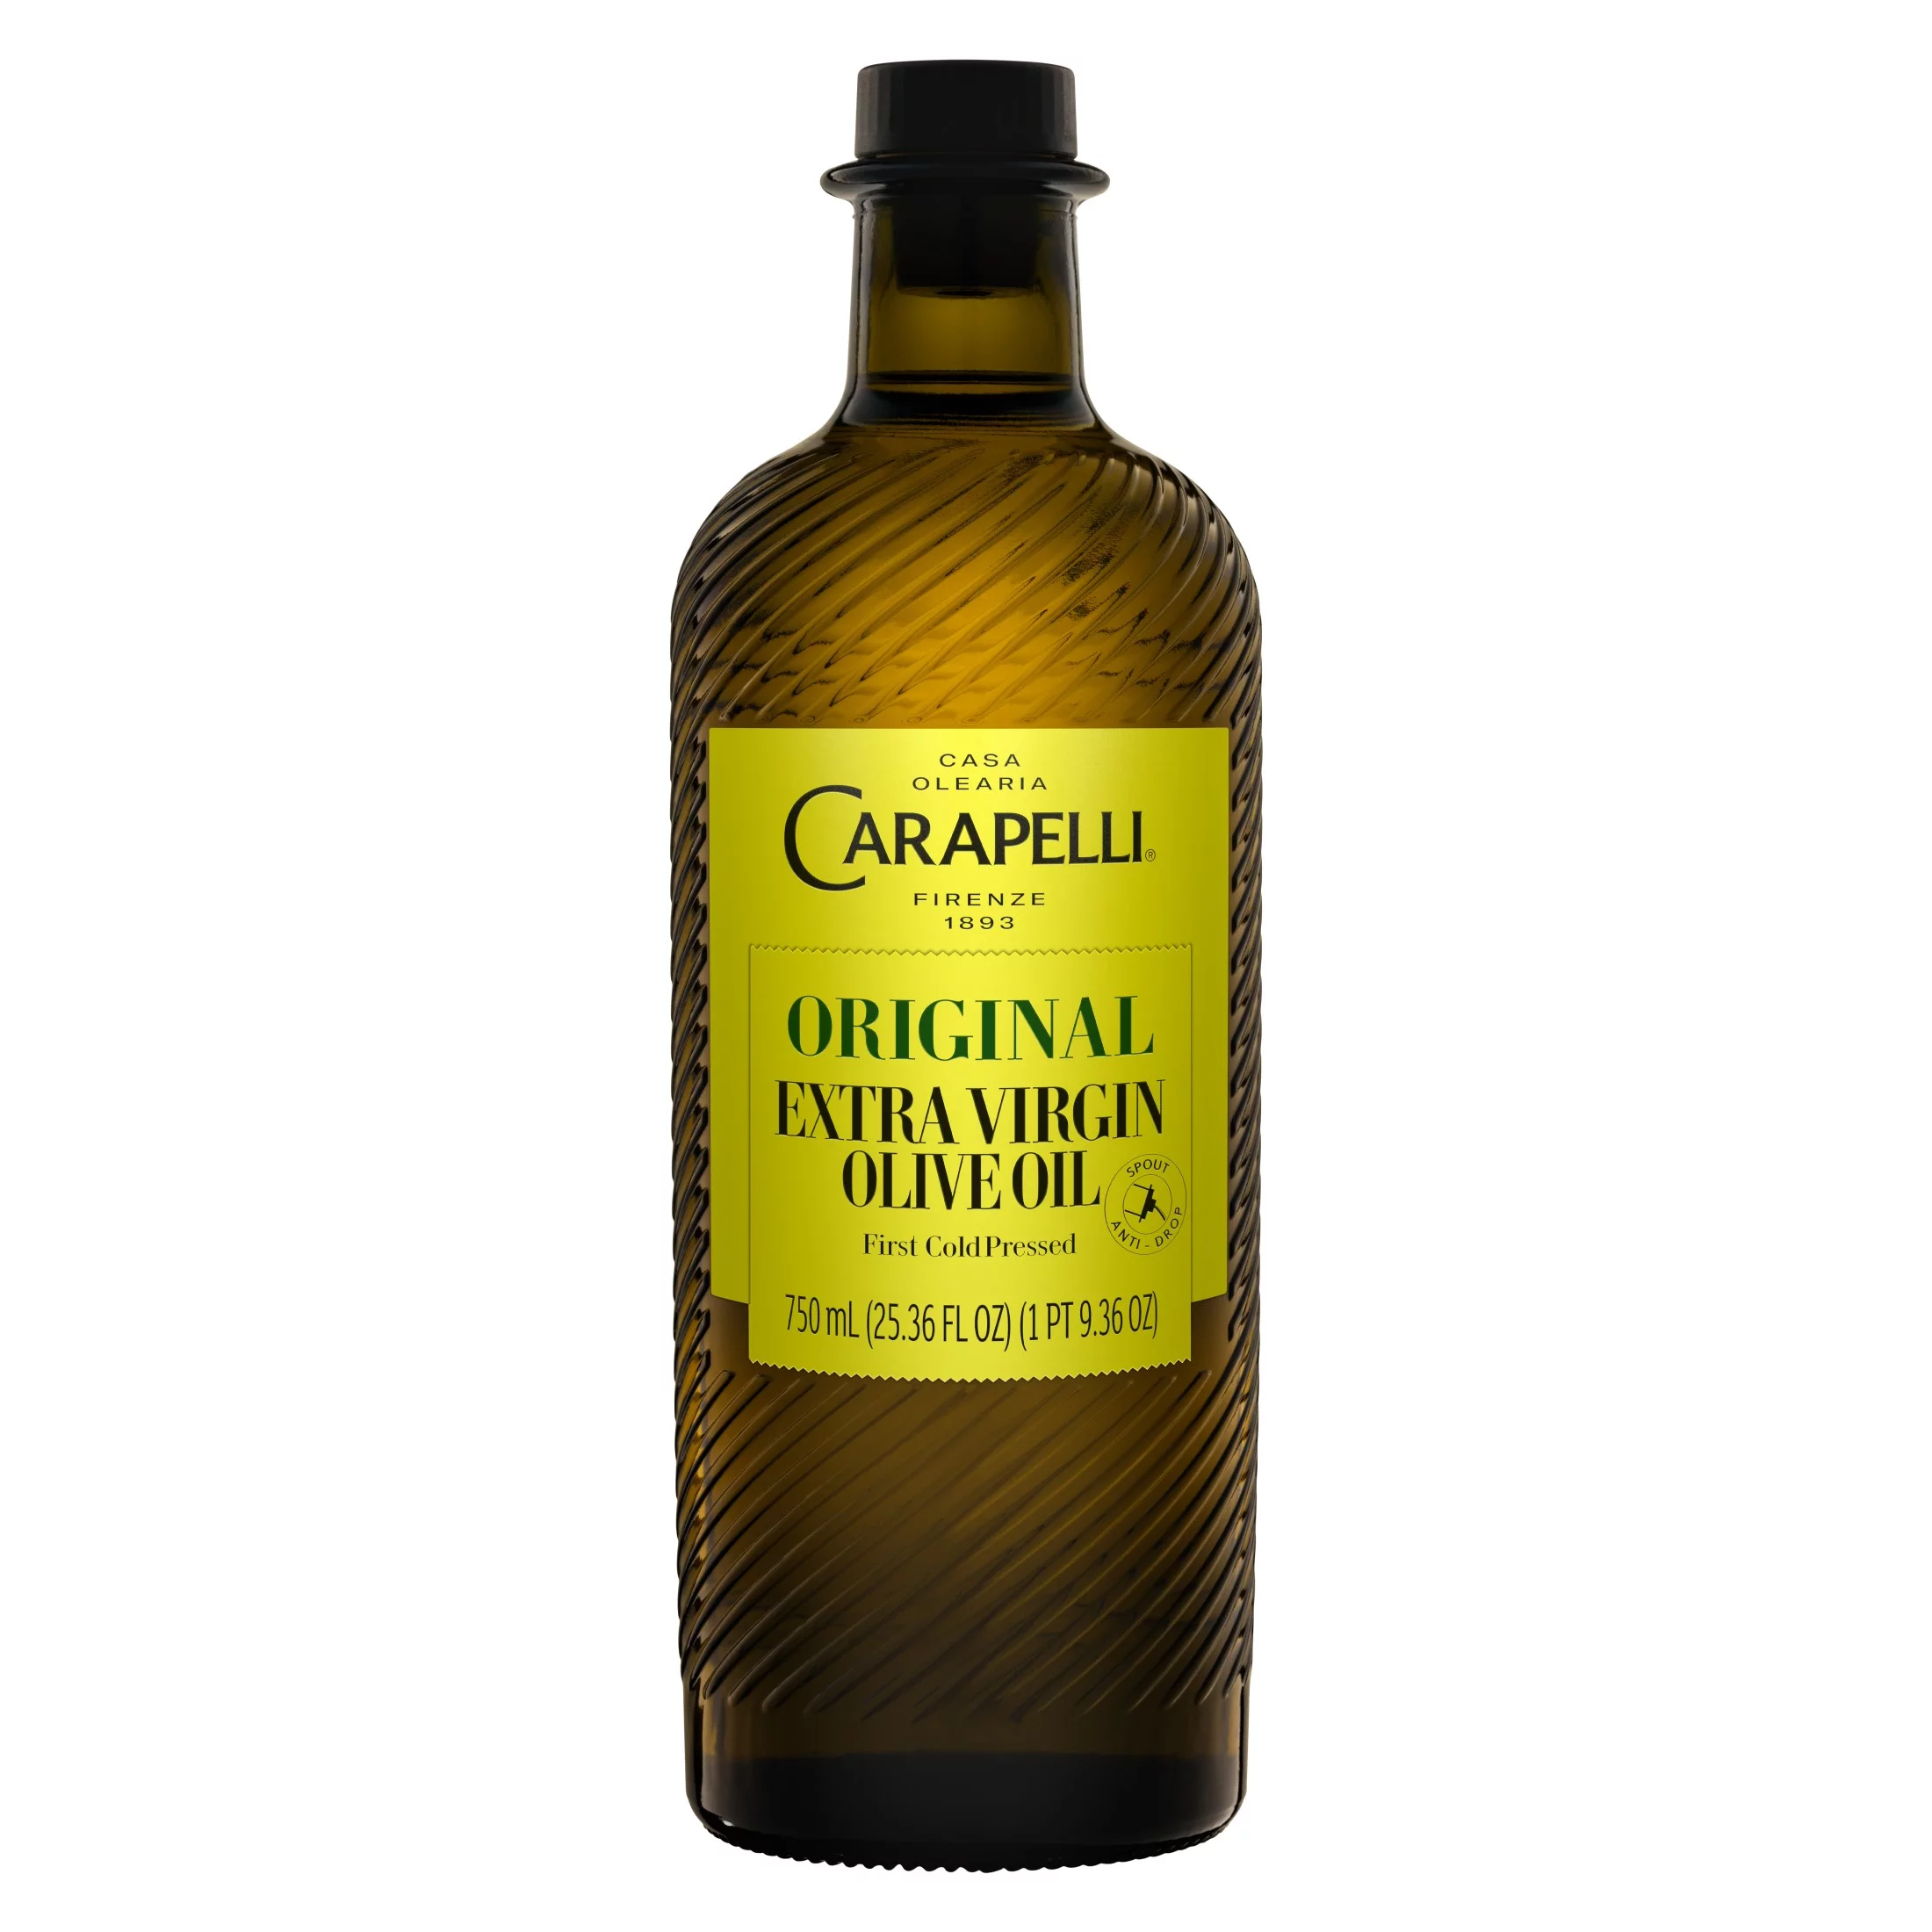 Carapelli Original Extra Virgin Olive Oil 25.36 fl oz (750ml)